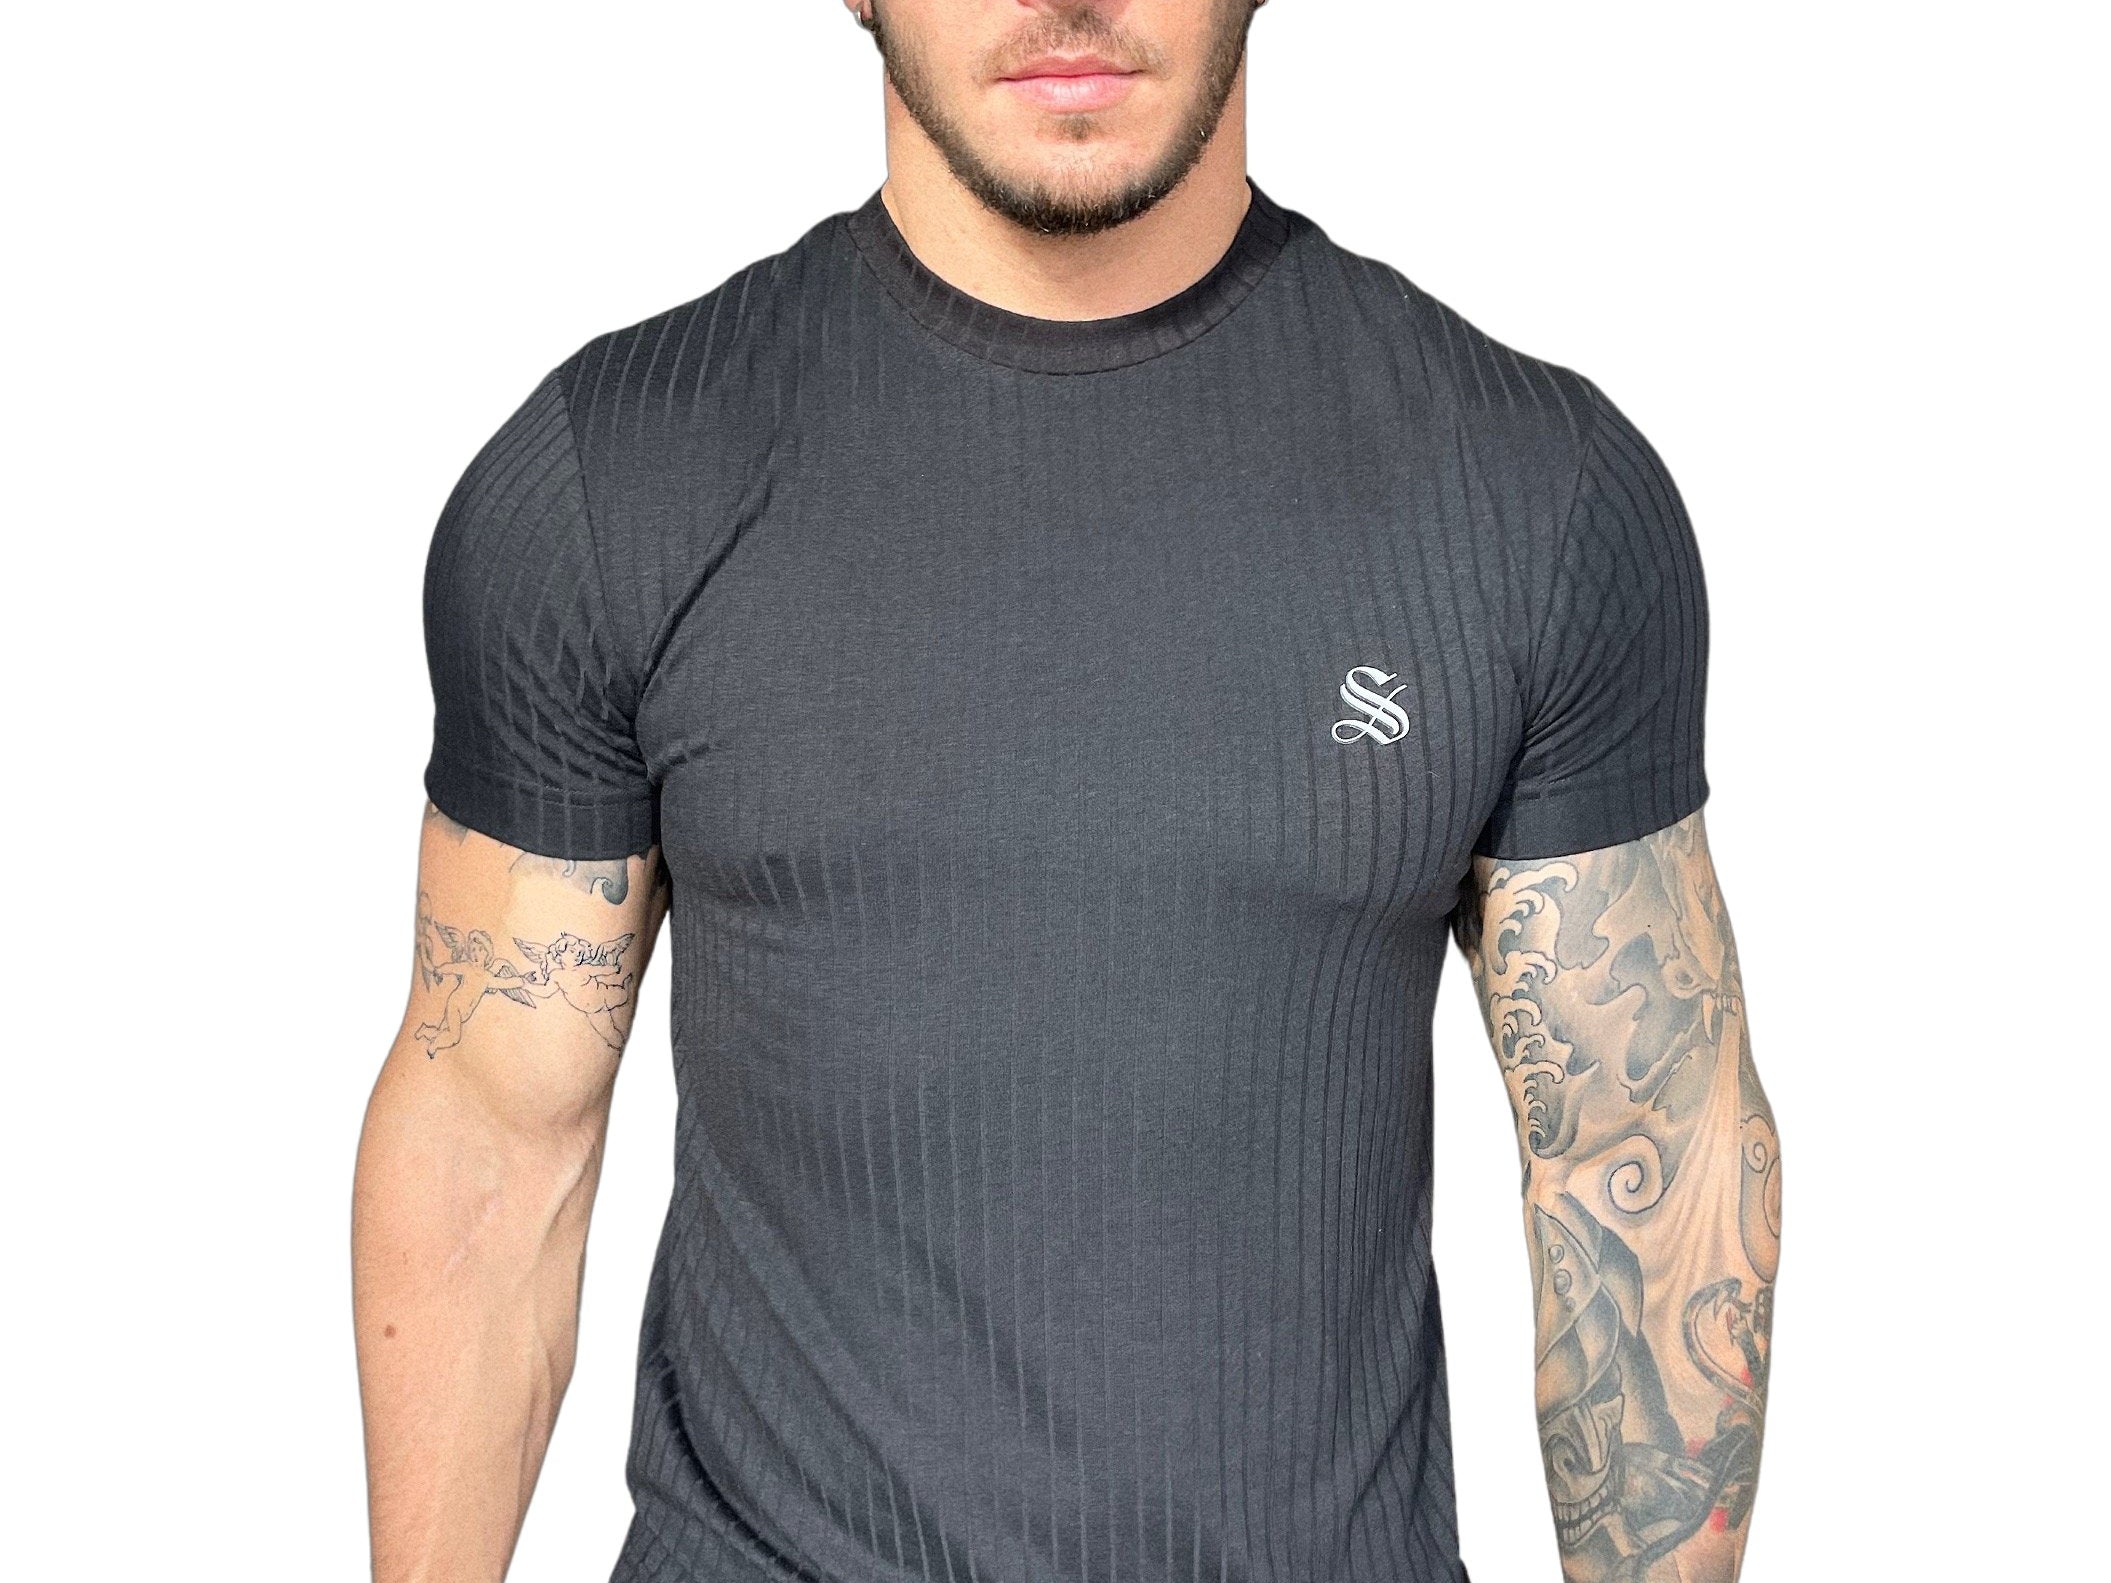 Roisbla - T-shirt for Men - Sarman Fashion - Wholesale Clothing Fashion Brand for Men from Canada